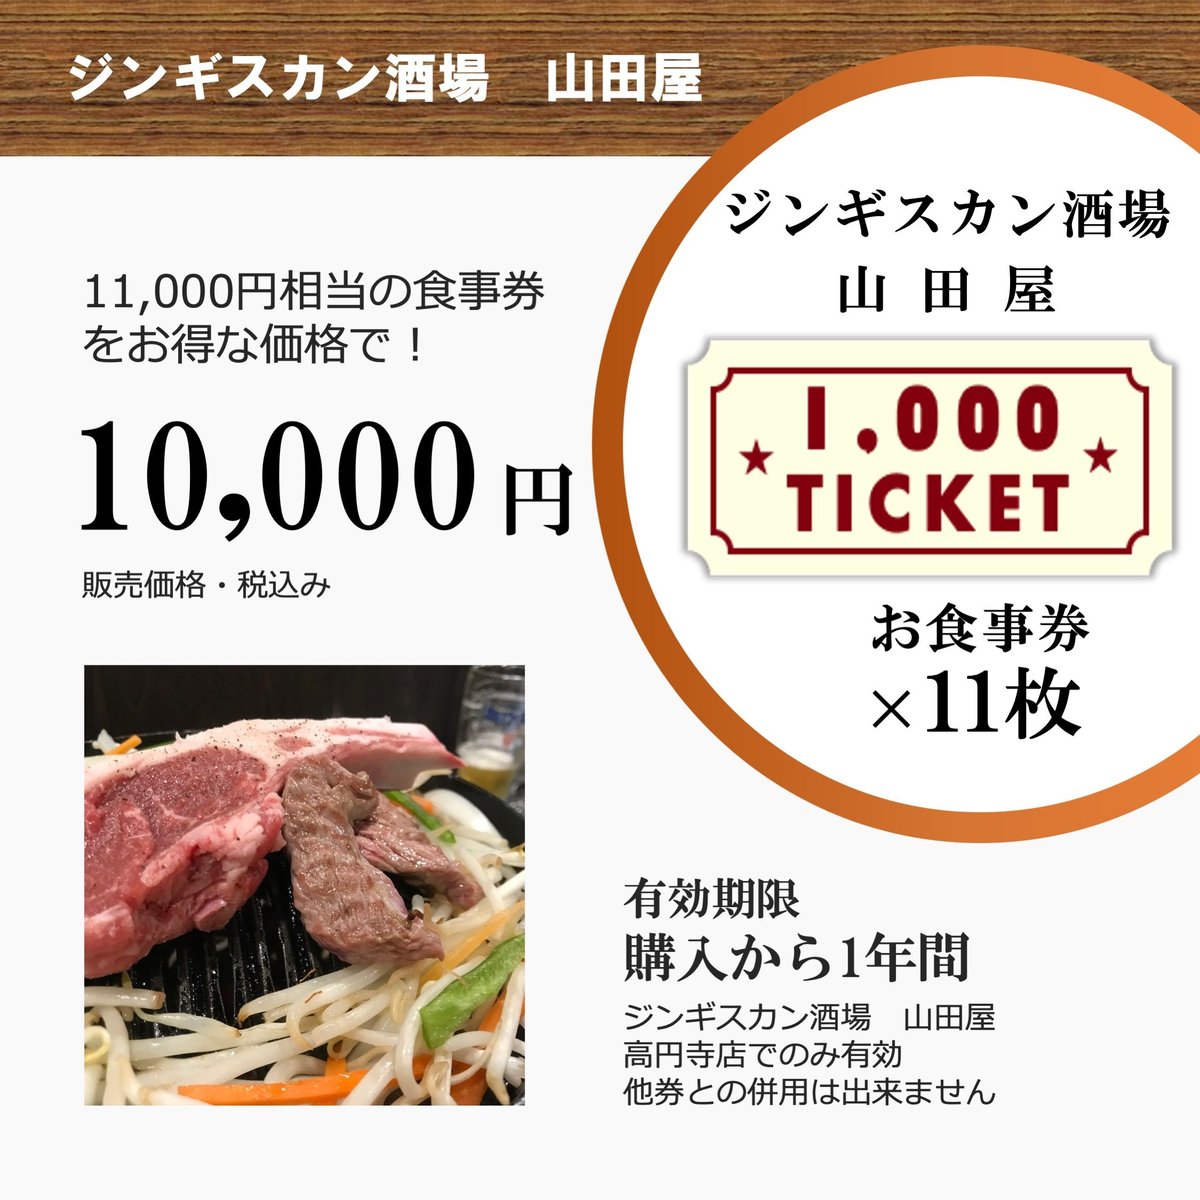 YAMADAYA TICKET 10000円